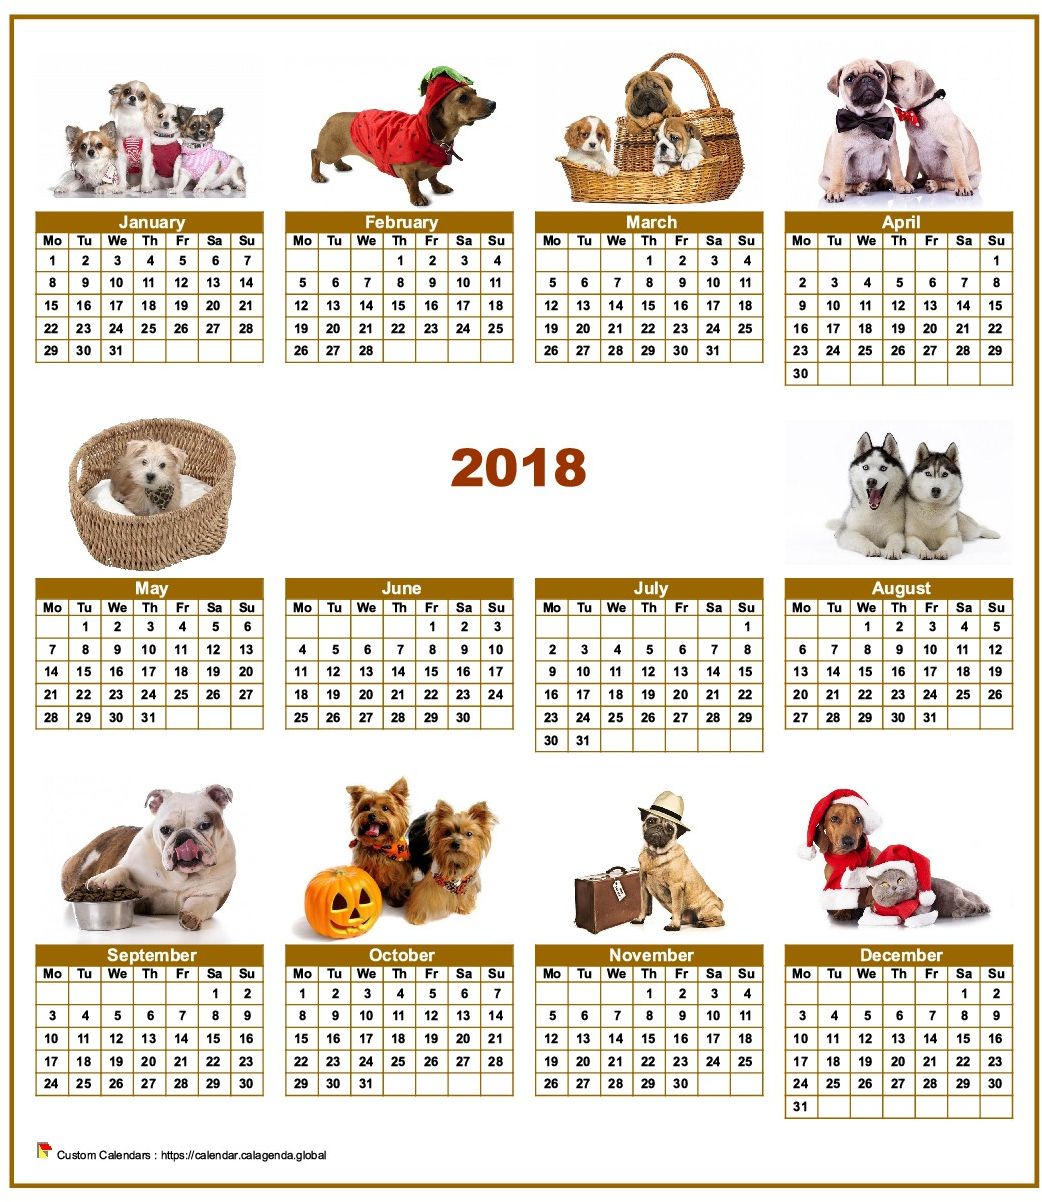 Calendar 2018 annual special 'dogs ' with 10 photos